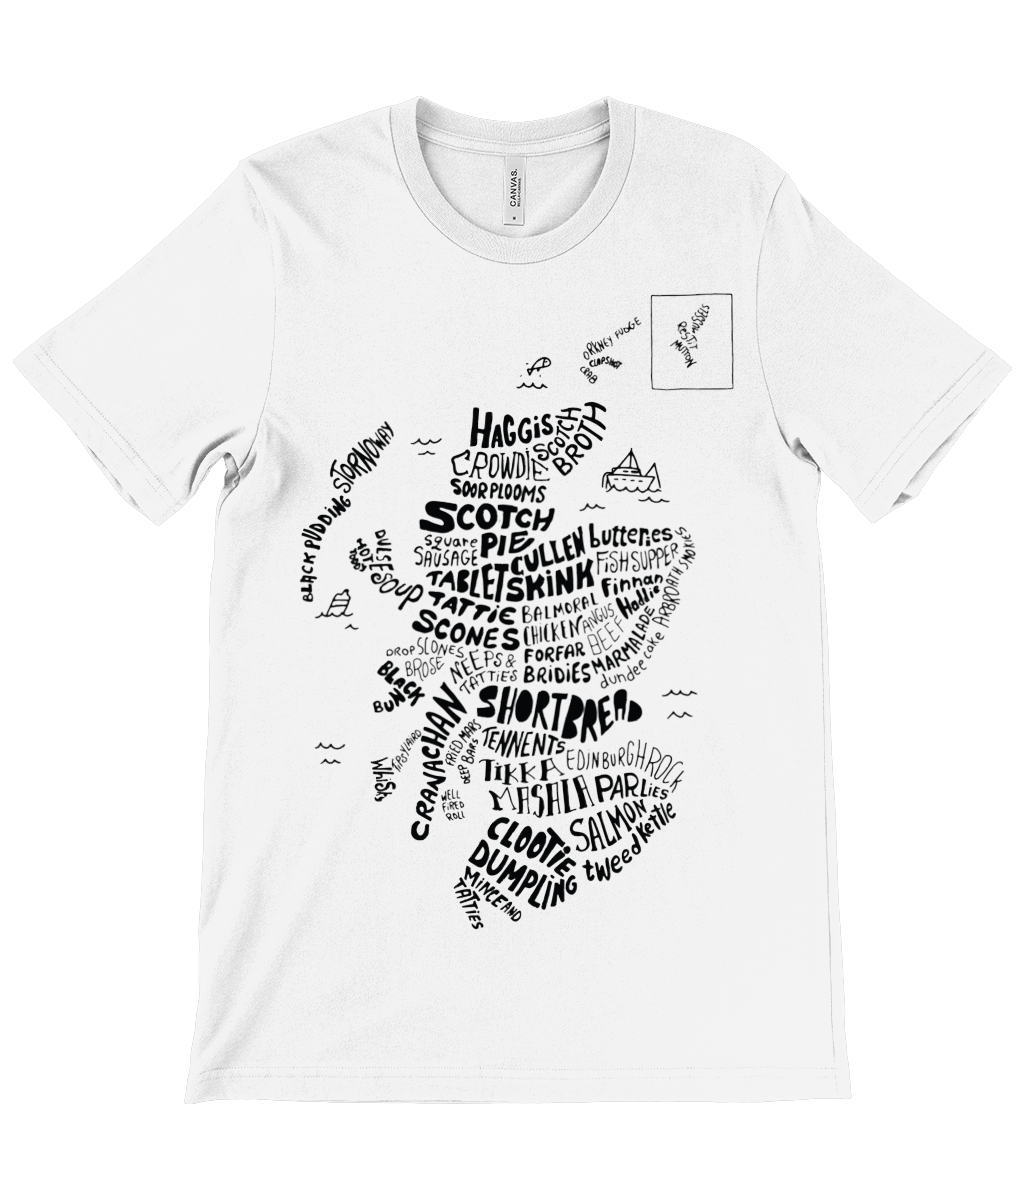 Foods of Scotland Map T-Shirt - B&W